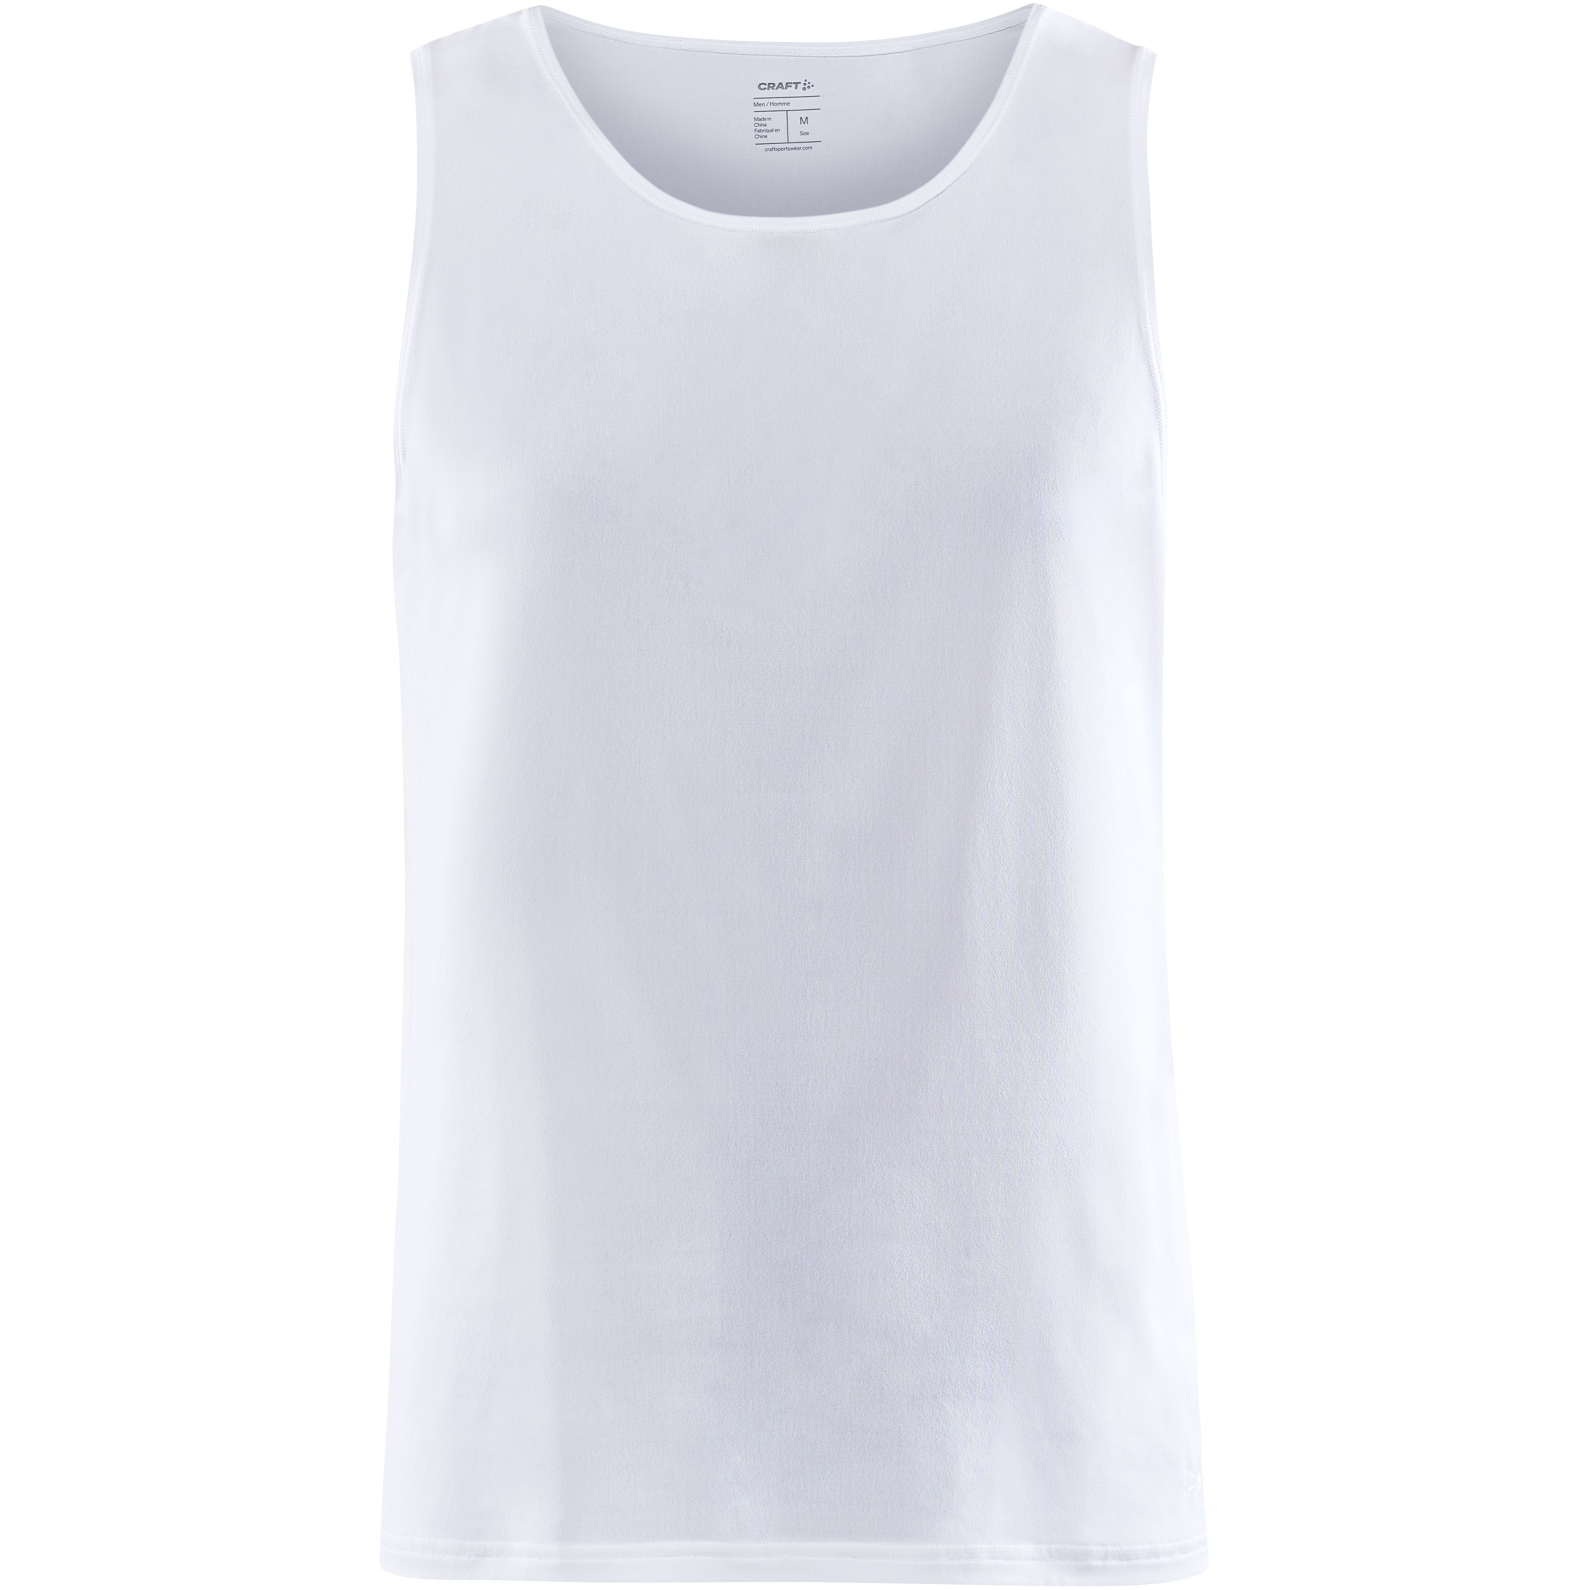 Foto de CRAFT Core Dry Camiseta sin Mangas Hombre - White